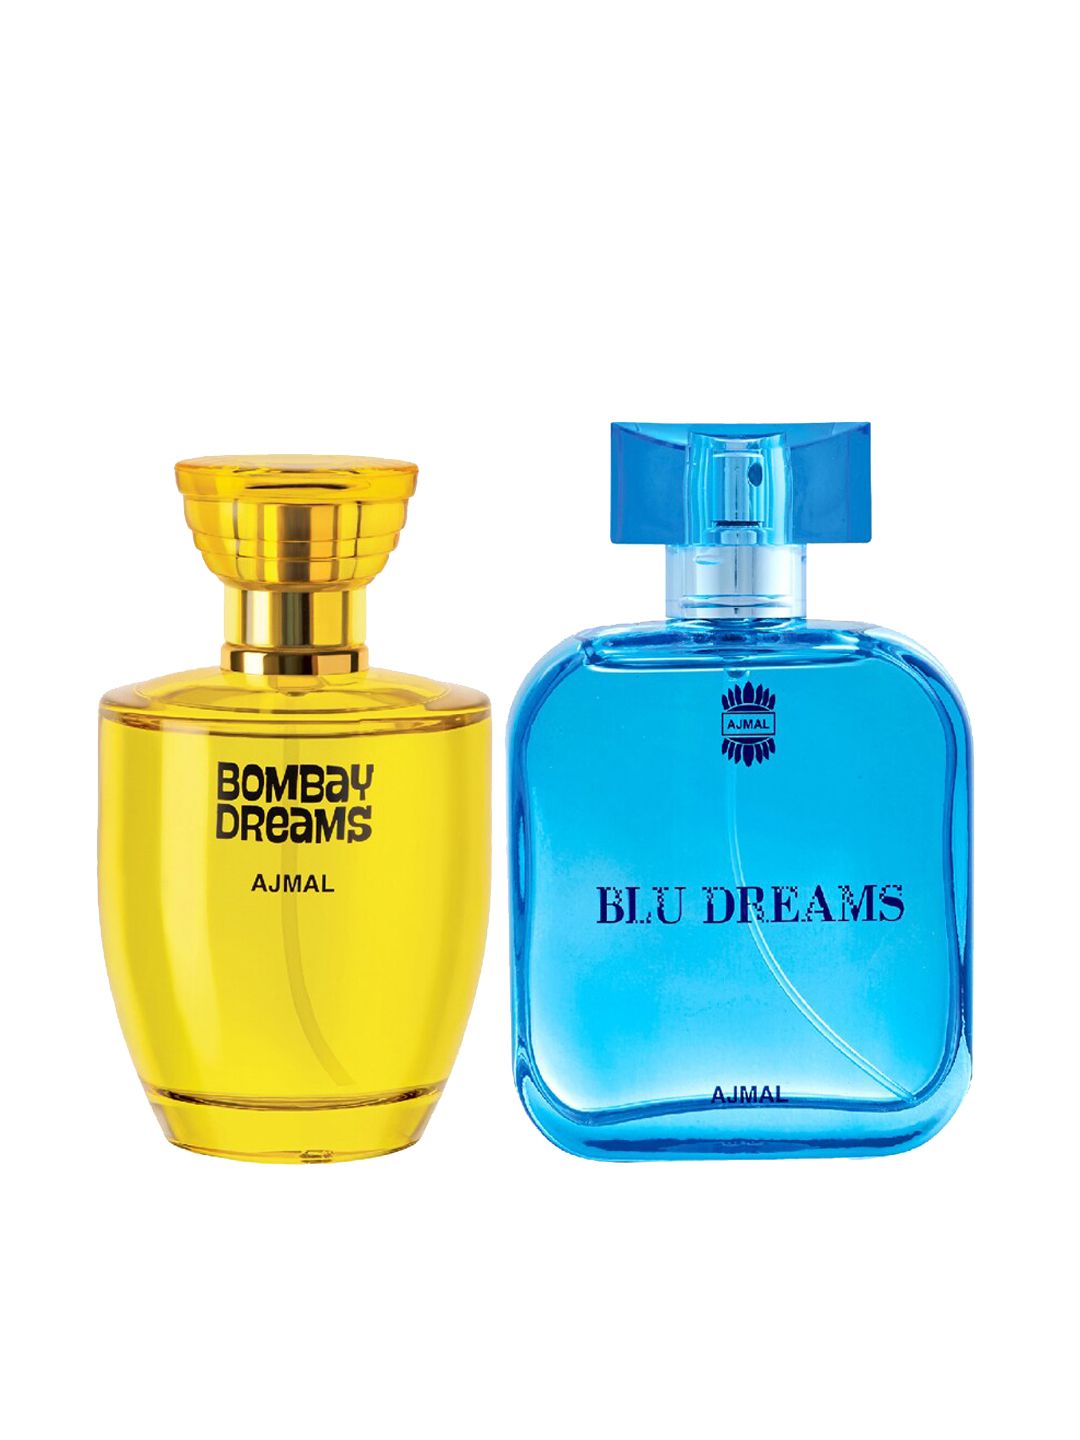 Ajmal Set of 2 Eau De Parfums - Bombay Dreams & Blu Dreams - 100ml each Price in India